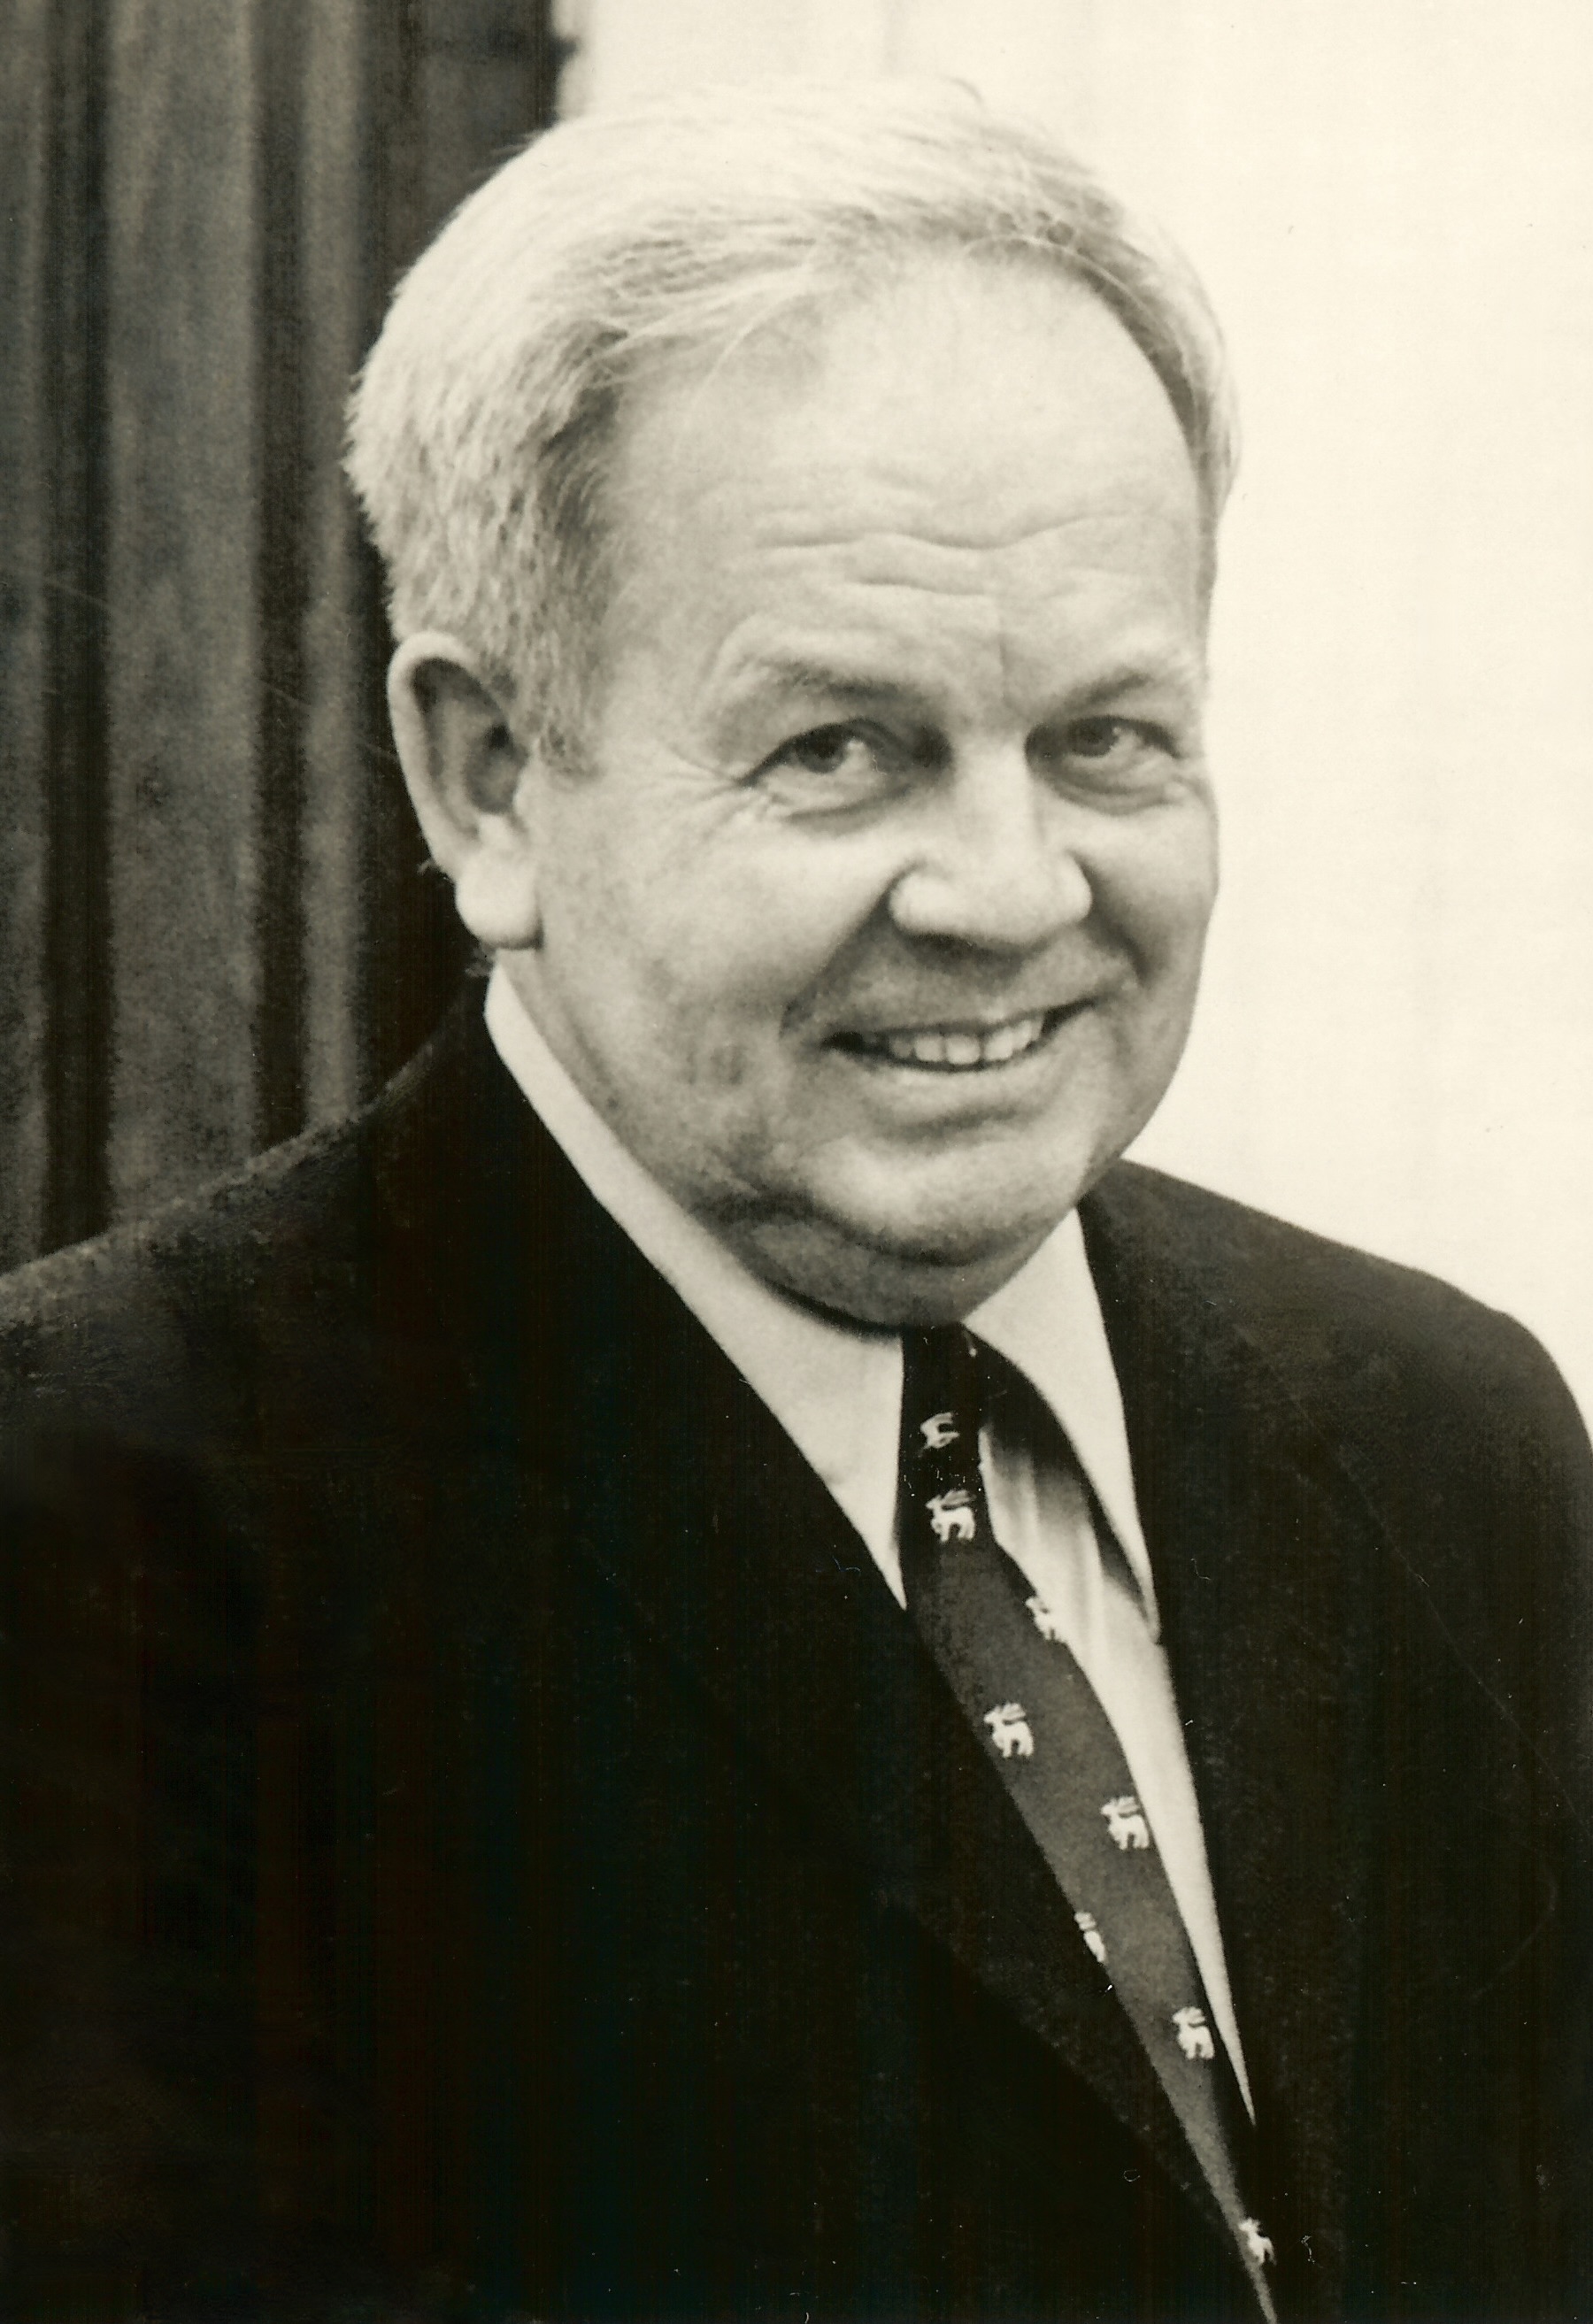 Professor Lloyd Thomas